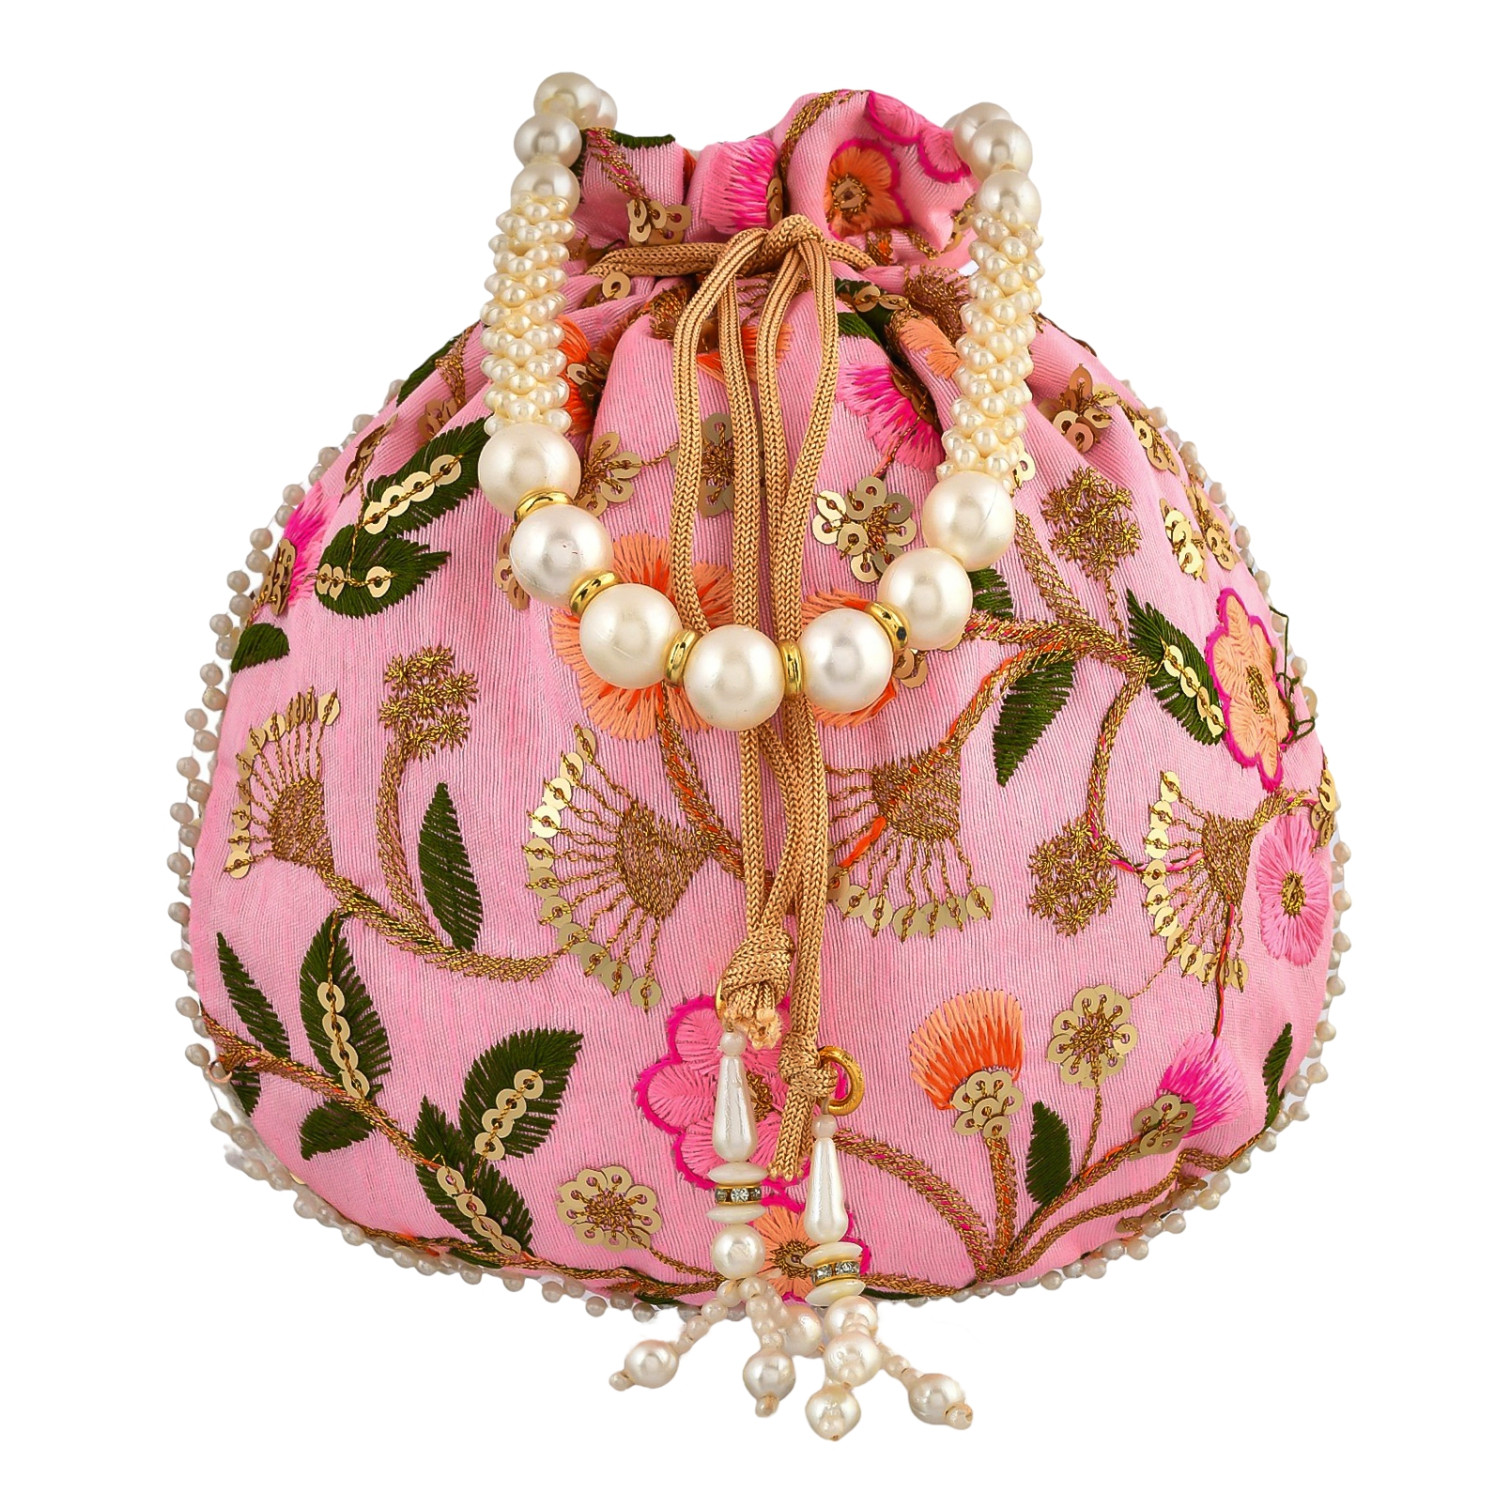 Kuber Industries Potli | Silk Wedding Potli | Christmas Gift Potli | Baby Shower Potli | Traditional Shagun Potli | Drawstring with Beads Handle Potli | New Flower Embroidery Potli | Pink